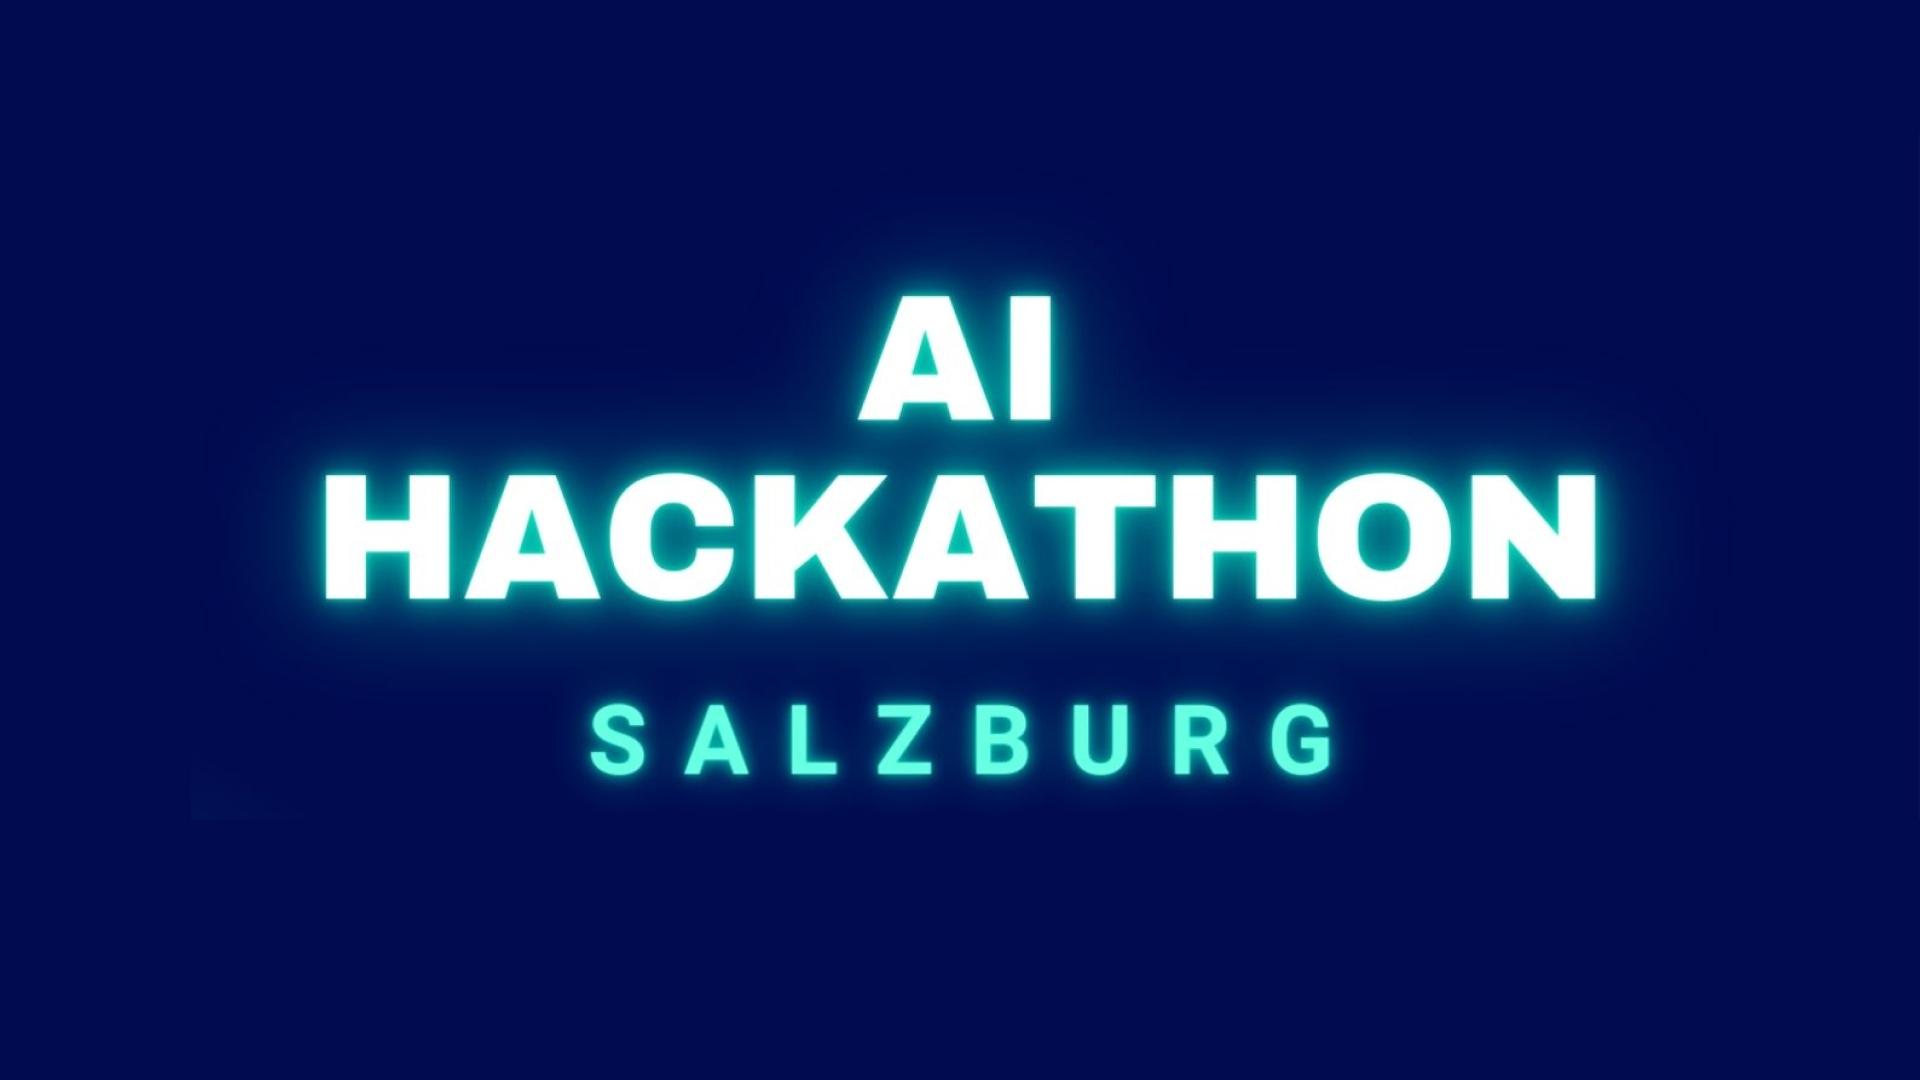 AI Hackathon Salzburg event thumbnail